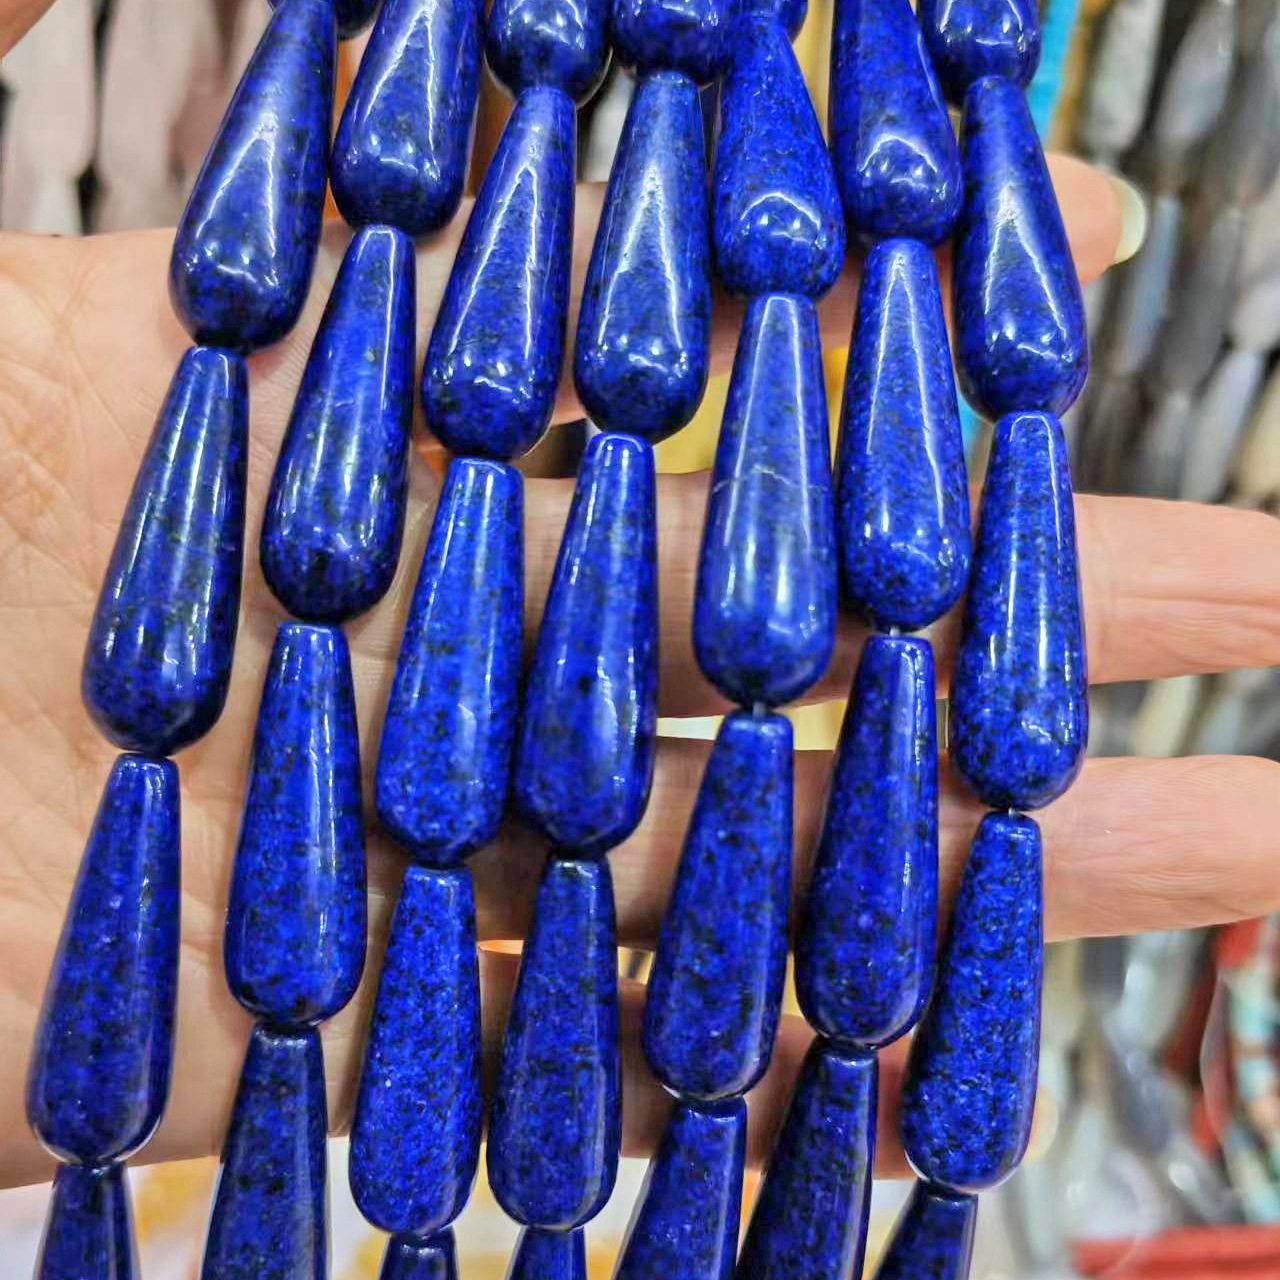 4 lapis lazuli